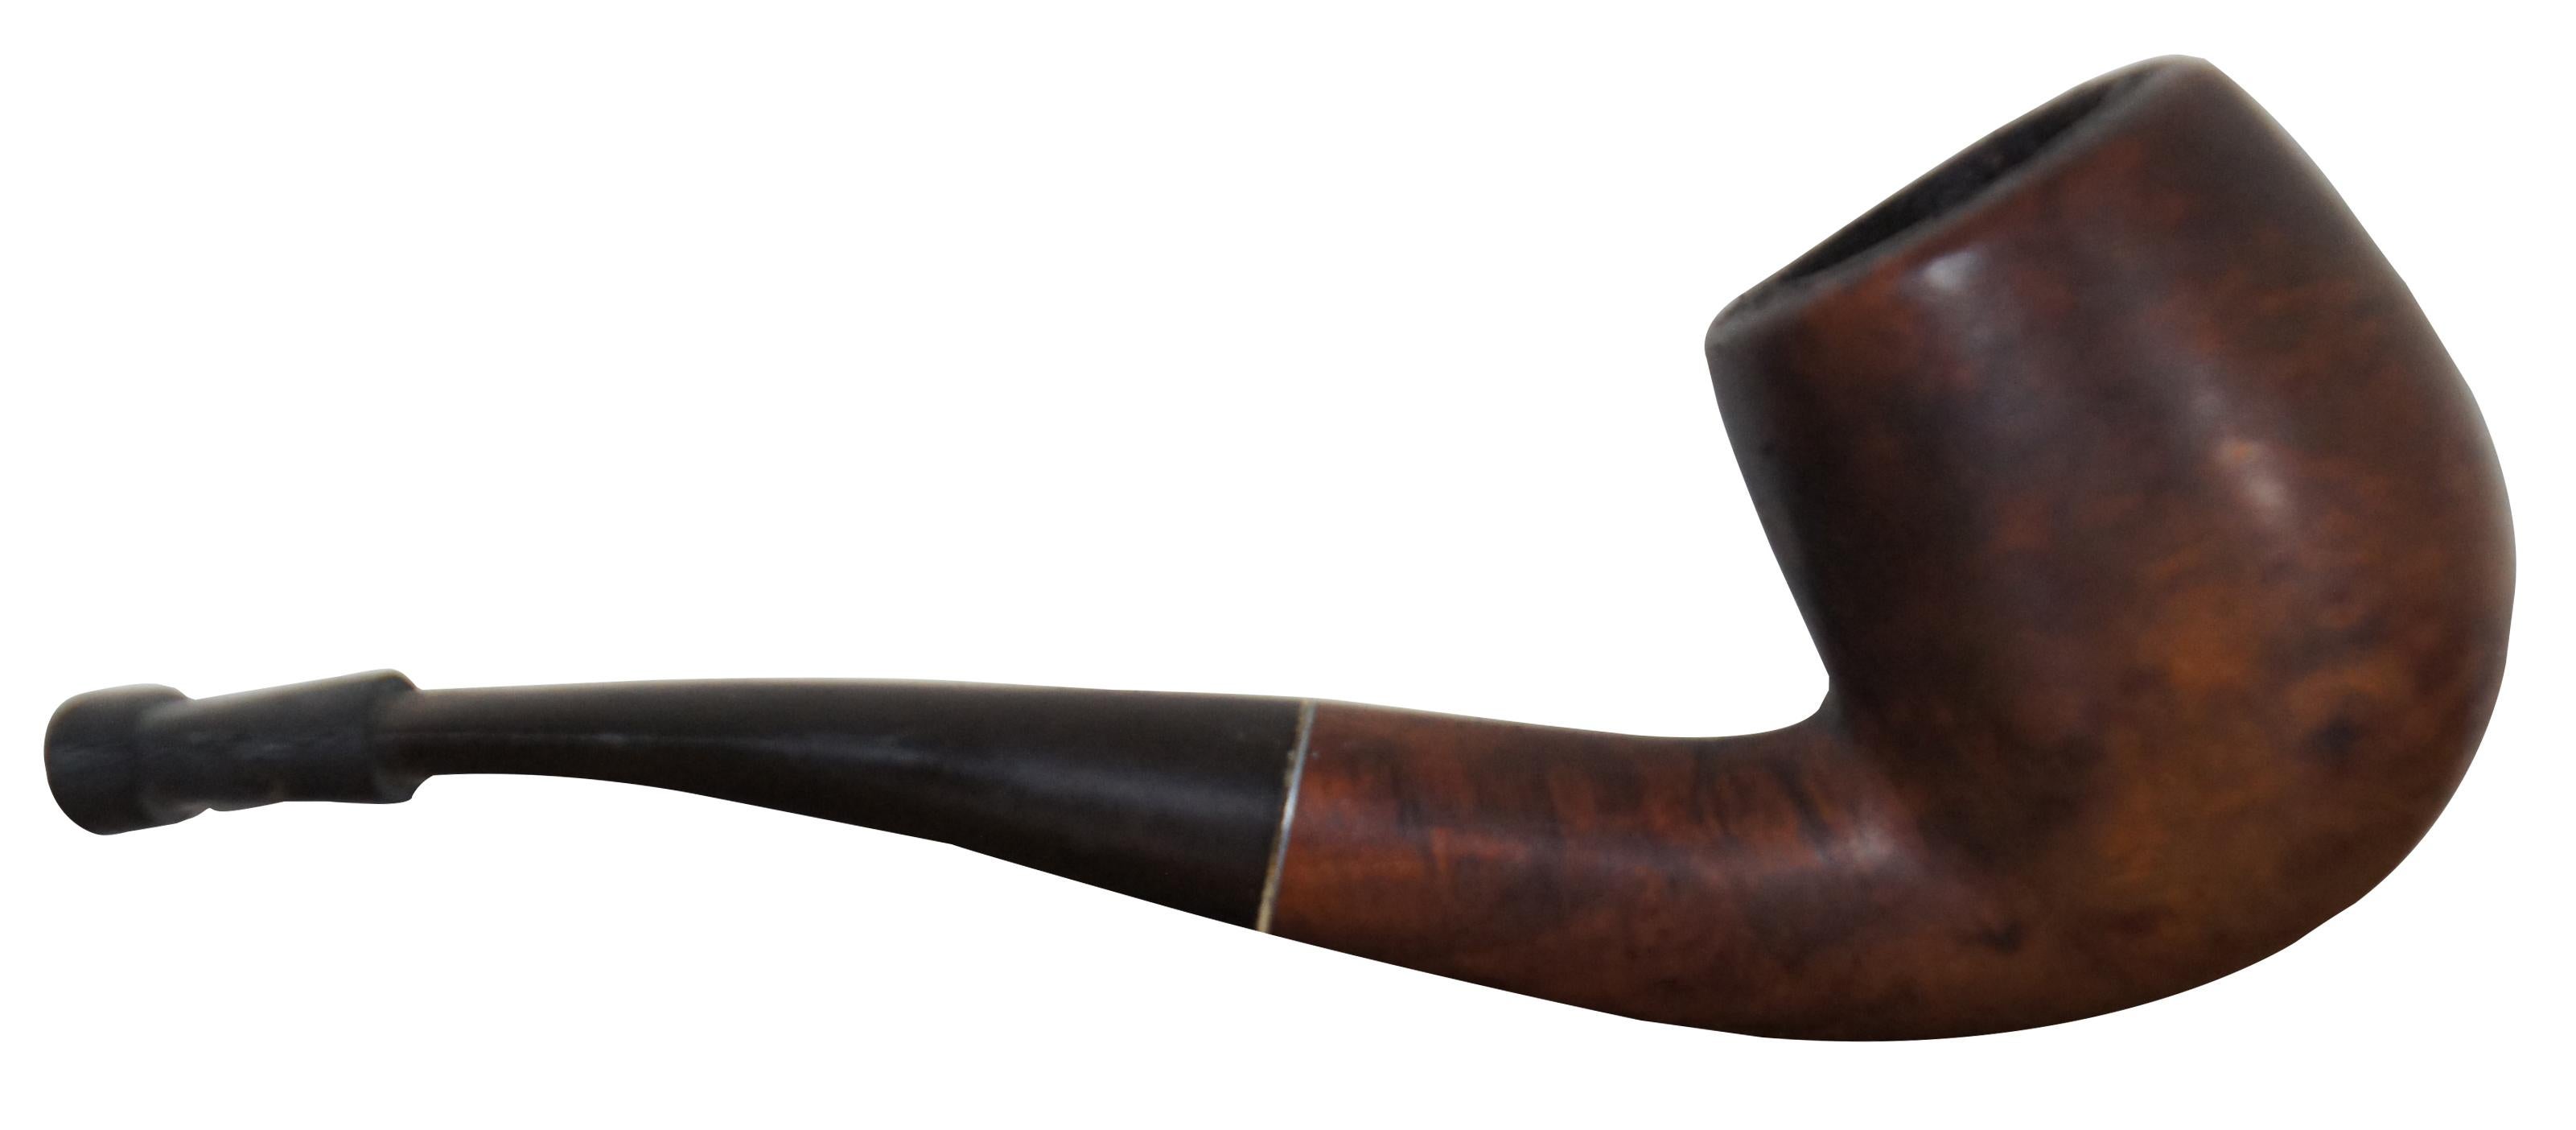 Antique Kaywoodie Drinkless filter burl wood smoking pipe, circa 1920s-1930s. Measure: 5